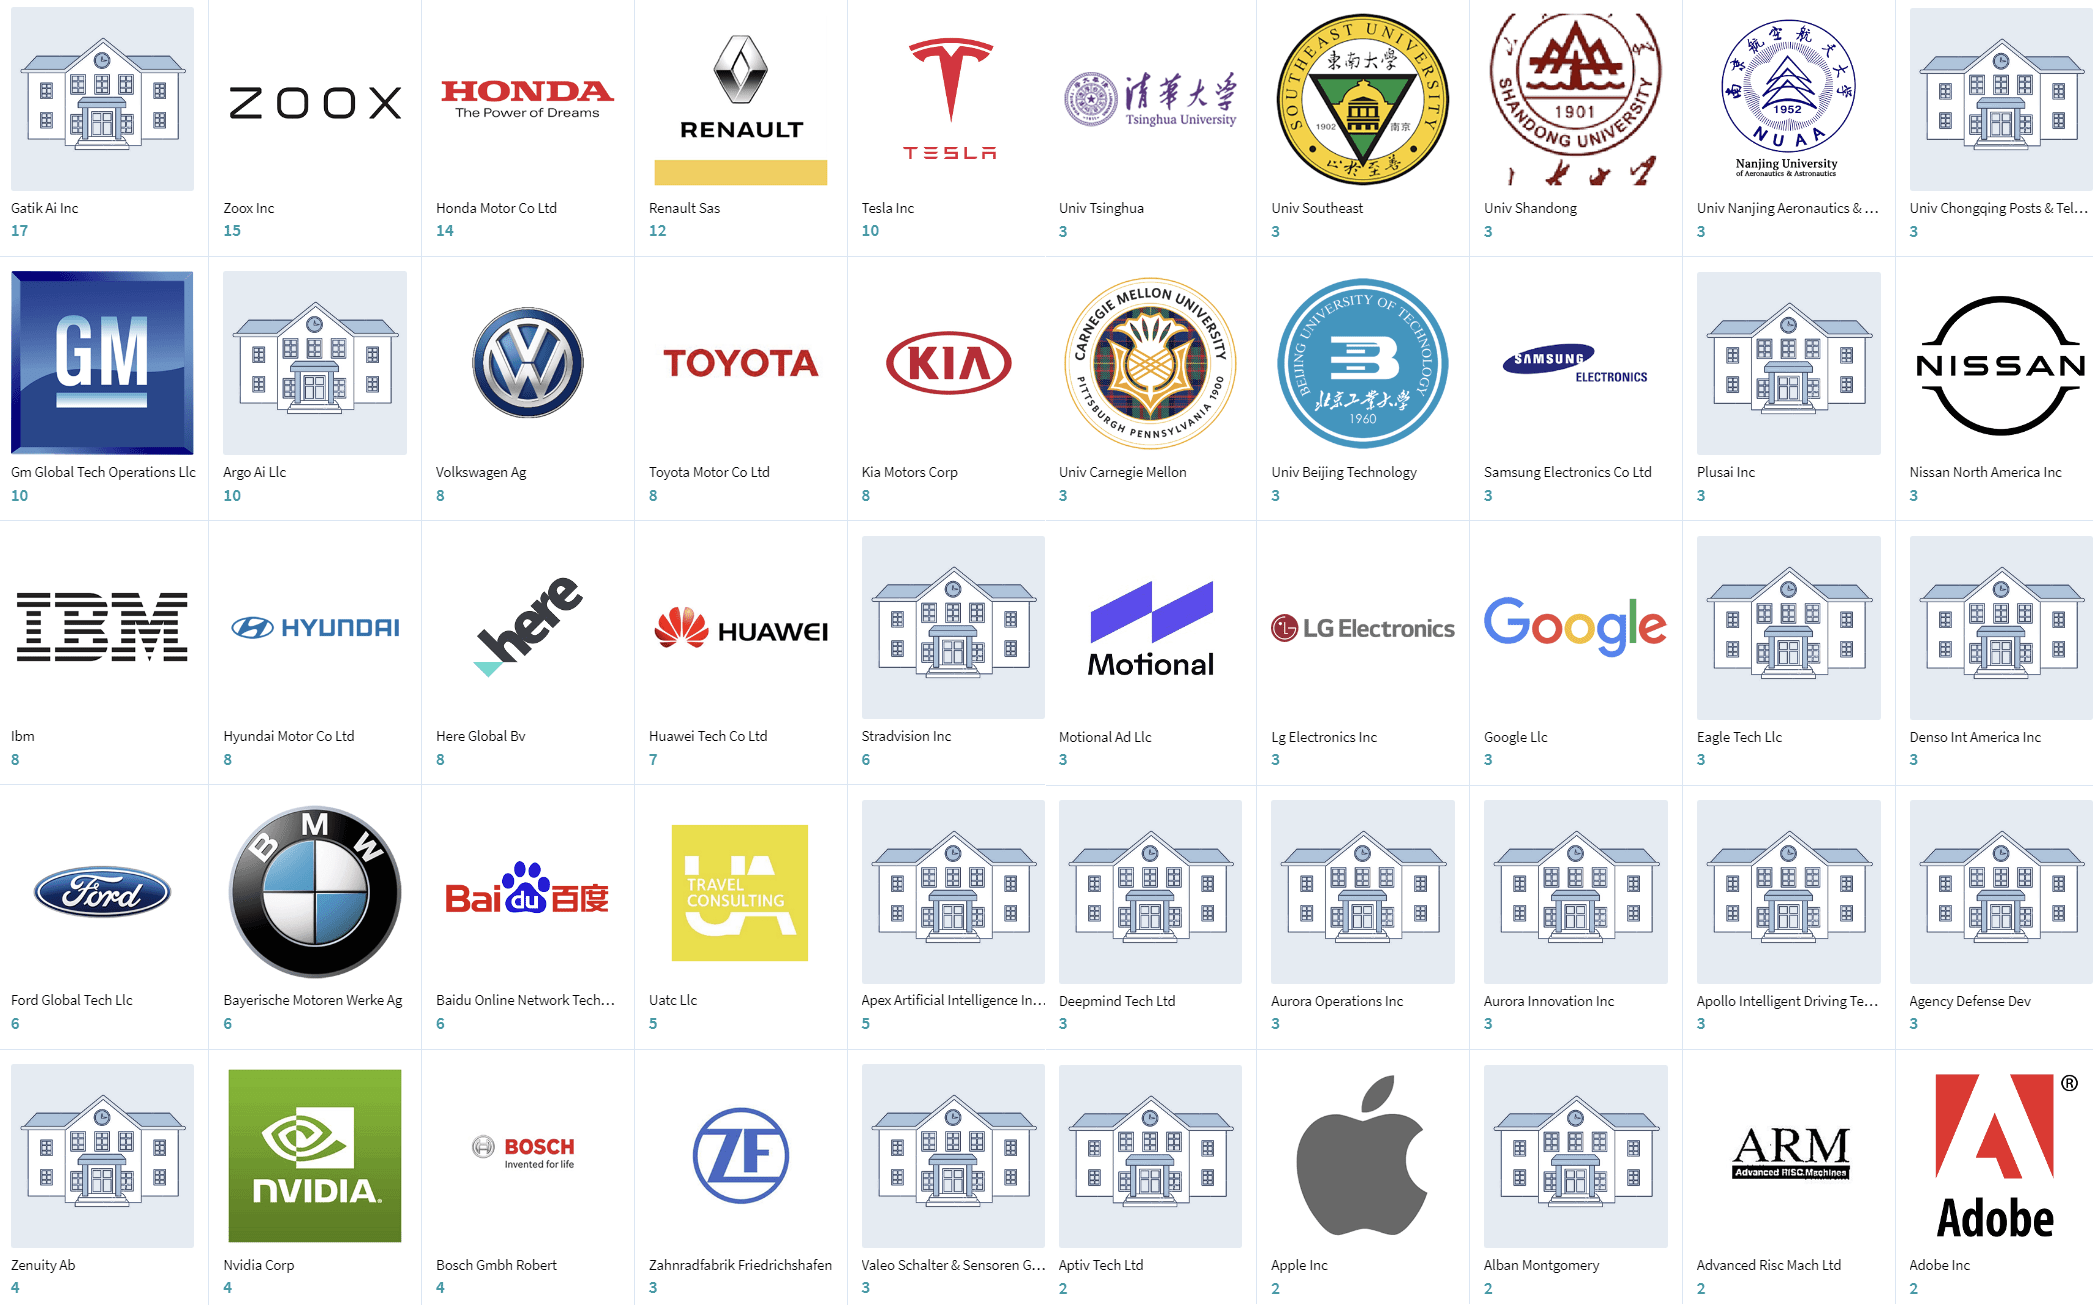 Organizations that cite my patent